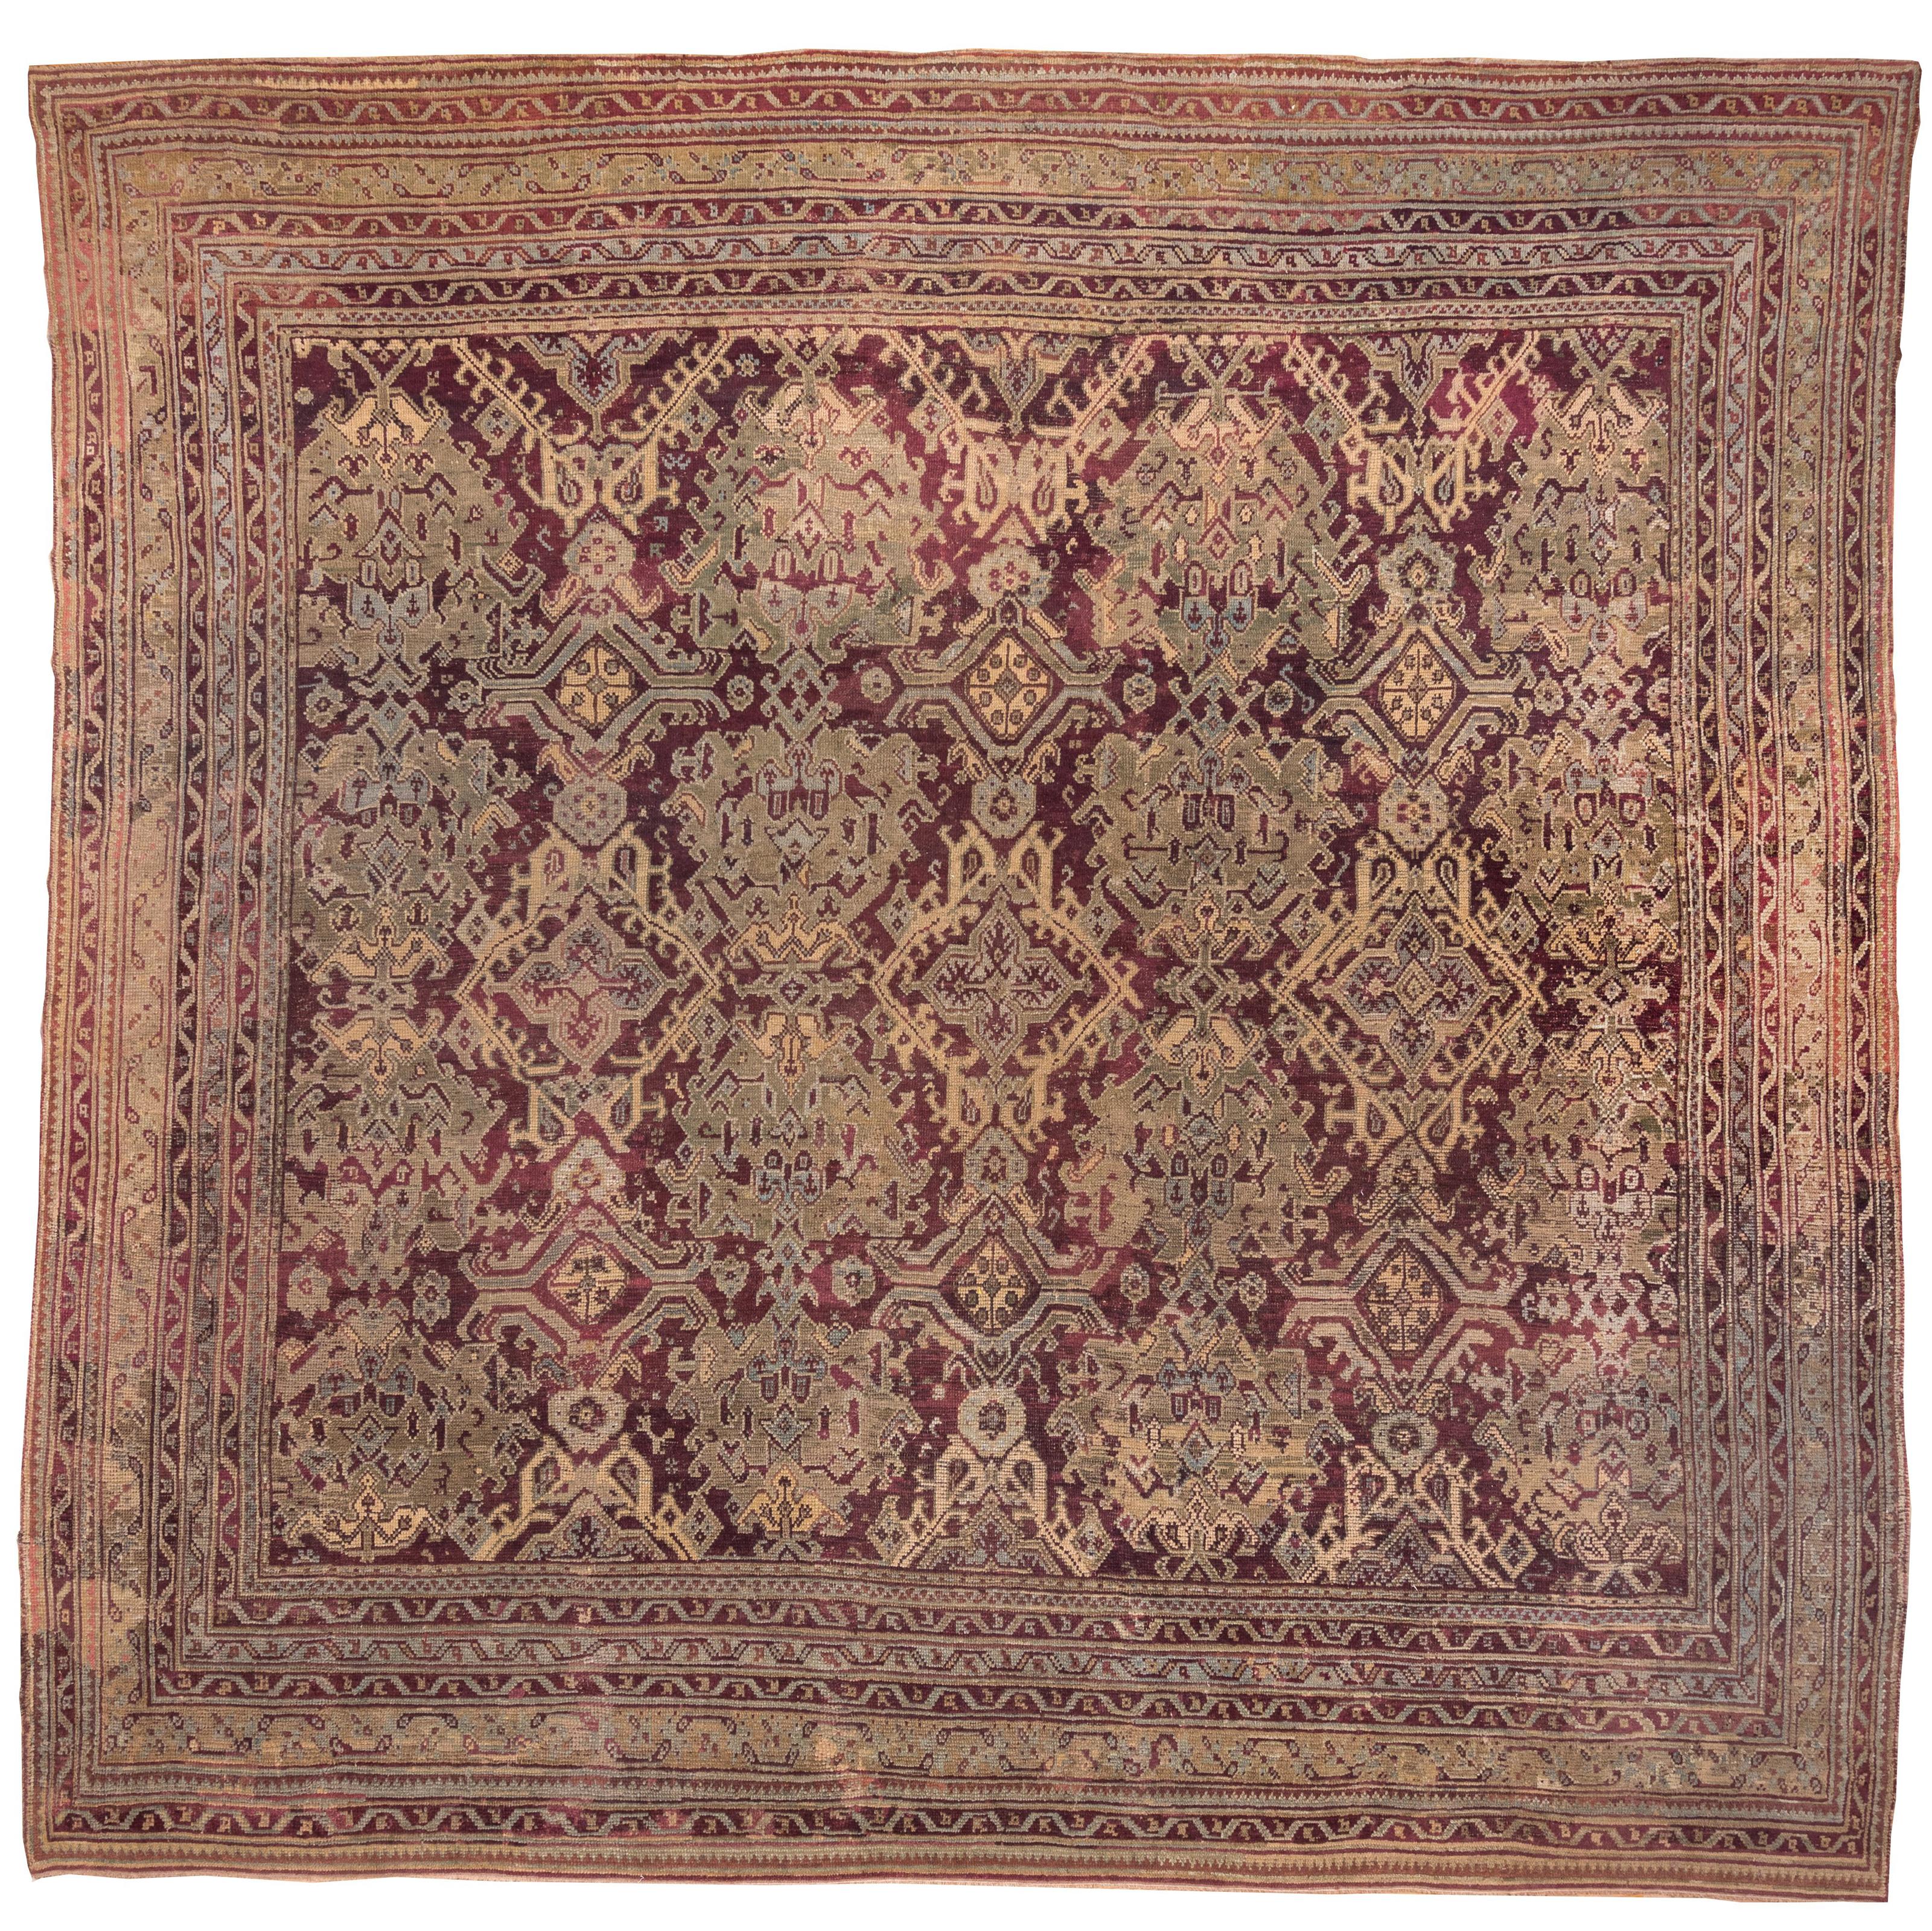 Antique Turkish Oushak Carpet, circa 1900s